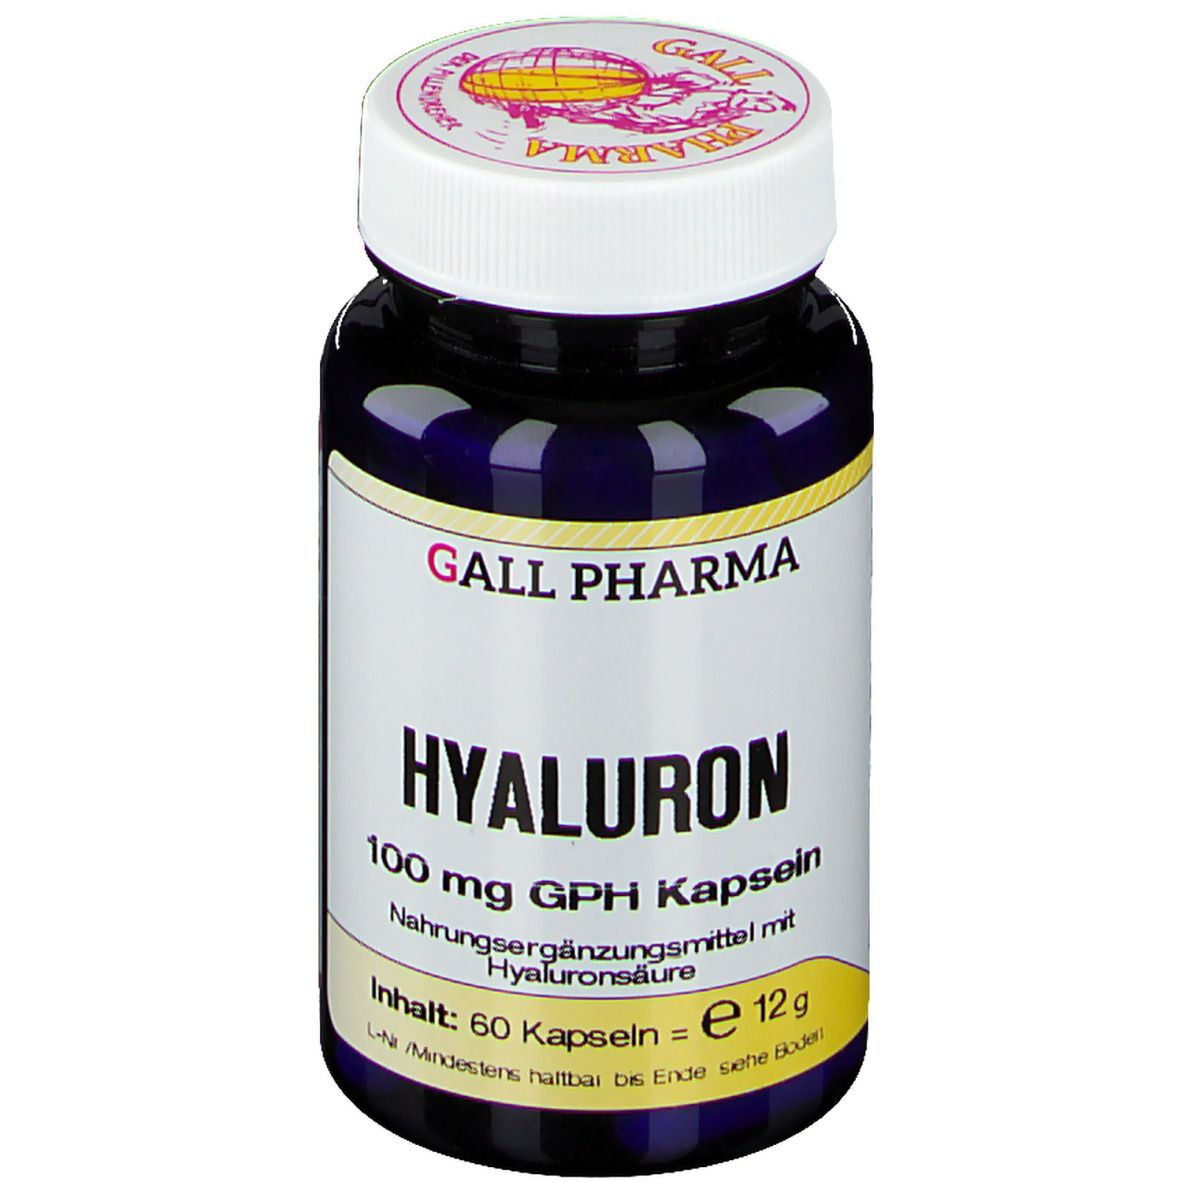 Image of GALL PHARMA Hyaluron 100 mg